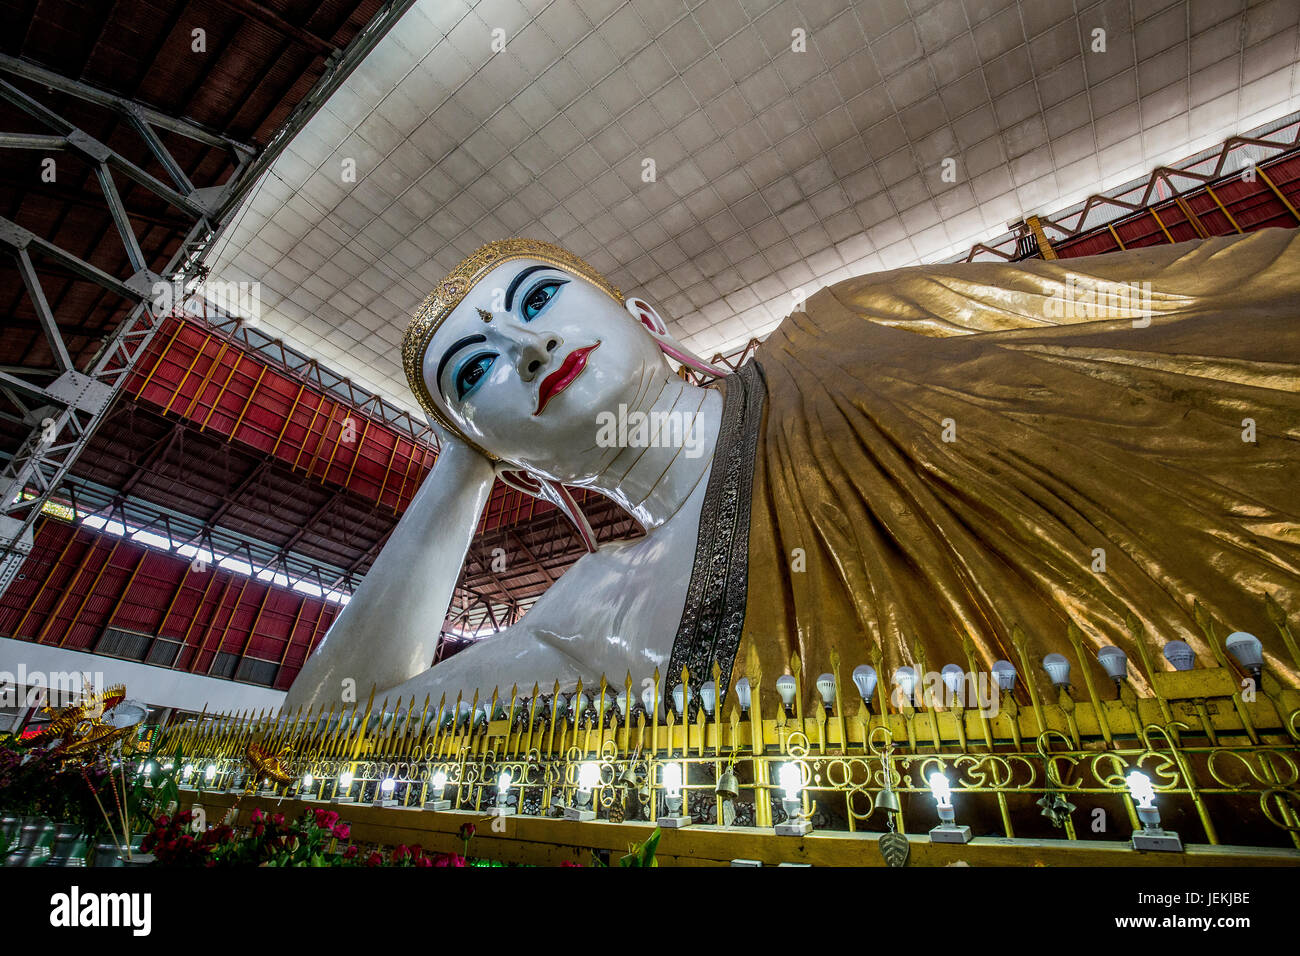 Chaukhtatgyi Paya di Yangon Ragoon città MYANMAR Birmania - Chaukhtatgyi il Tempio del Buddha reclinato - immagini di Buddha in Myanmar Foto Stock